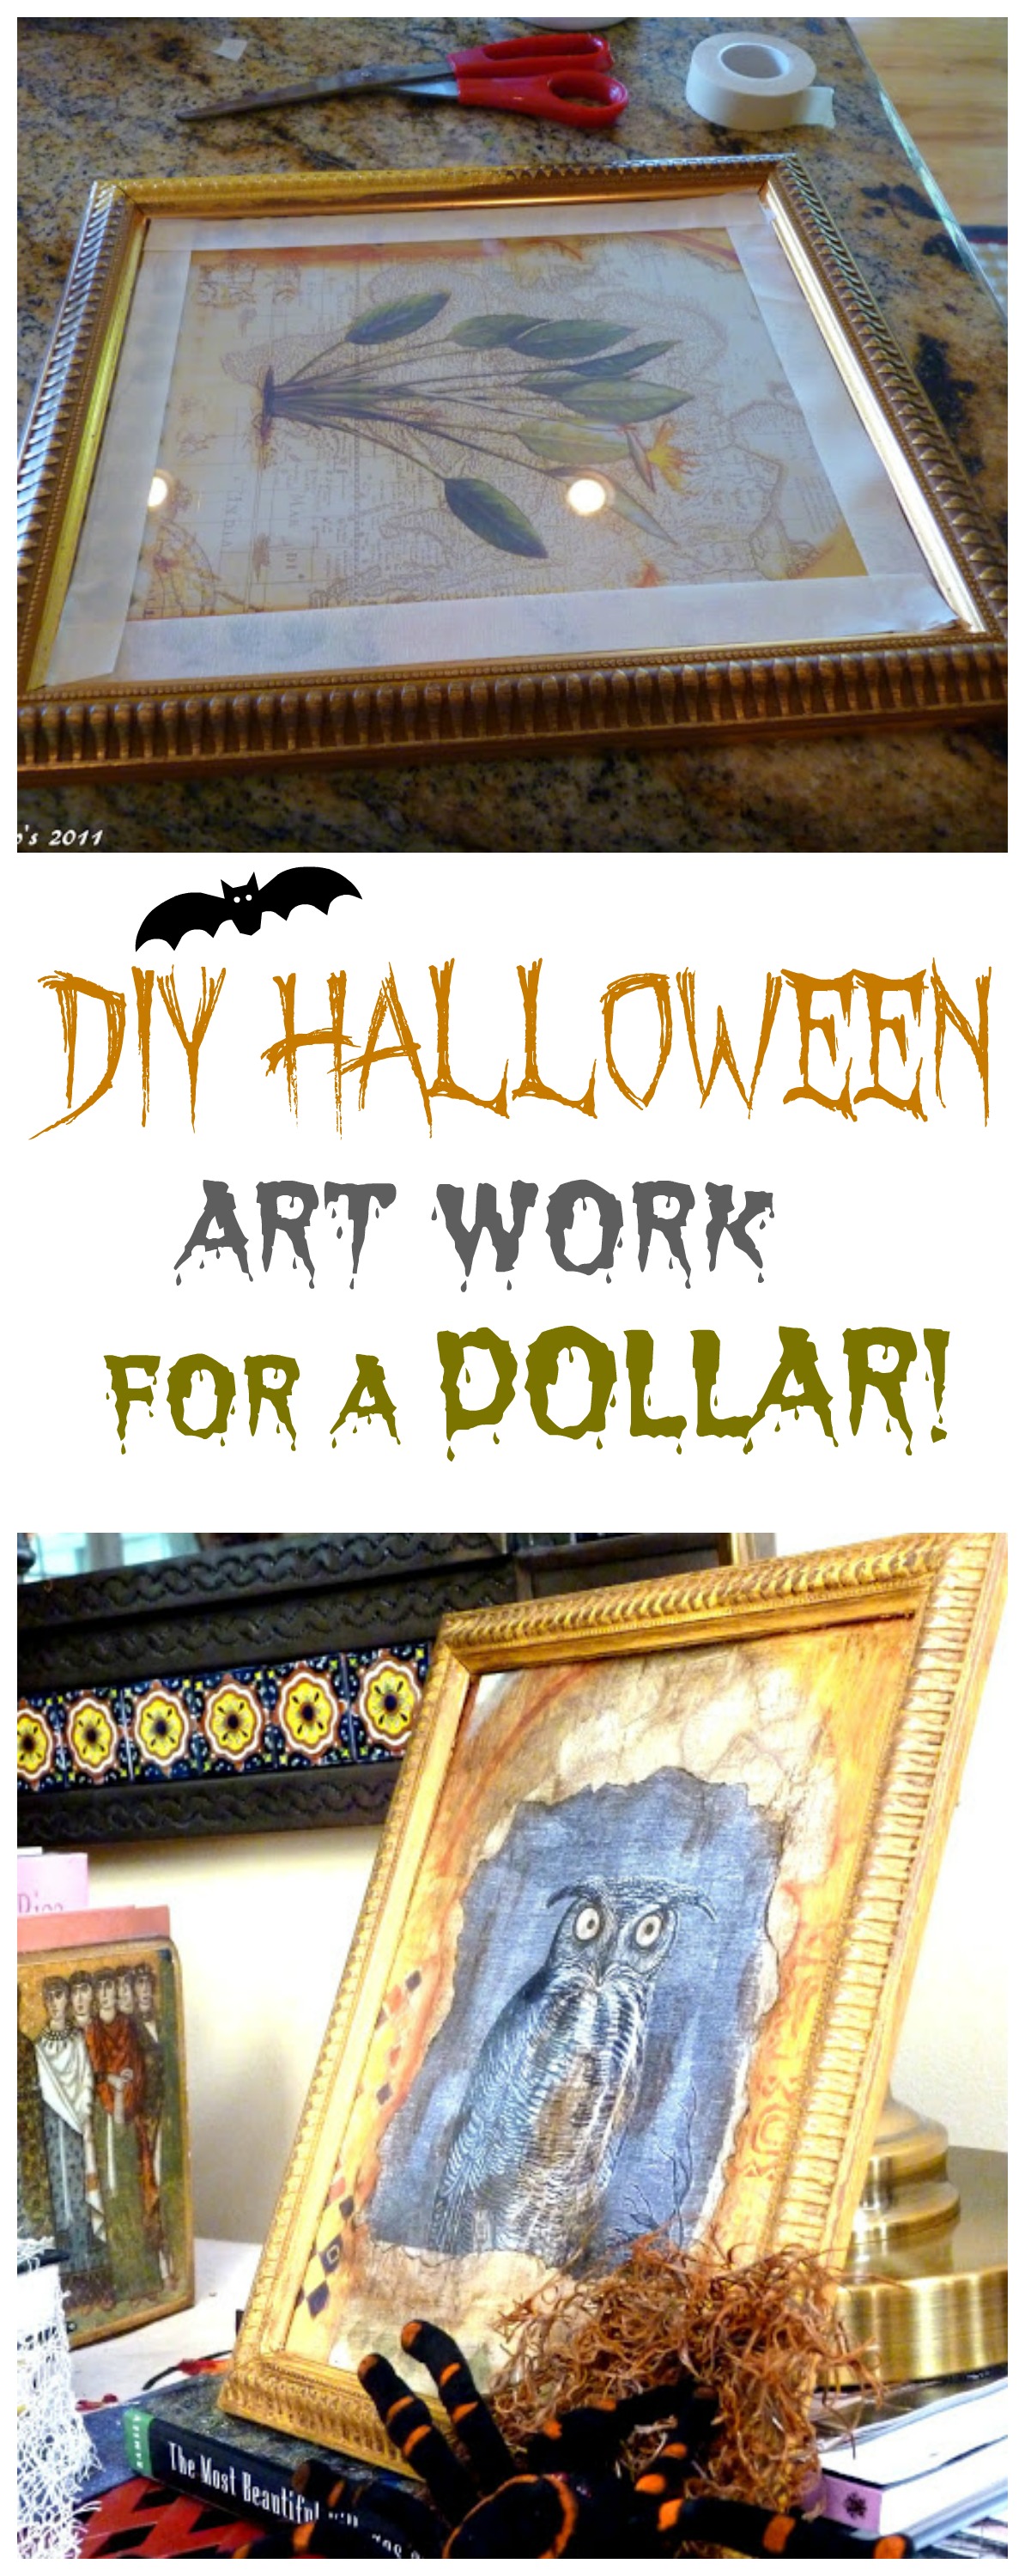 Halloween art work for a dollar